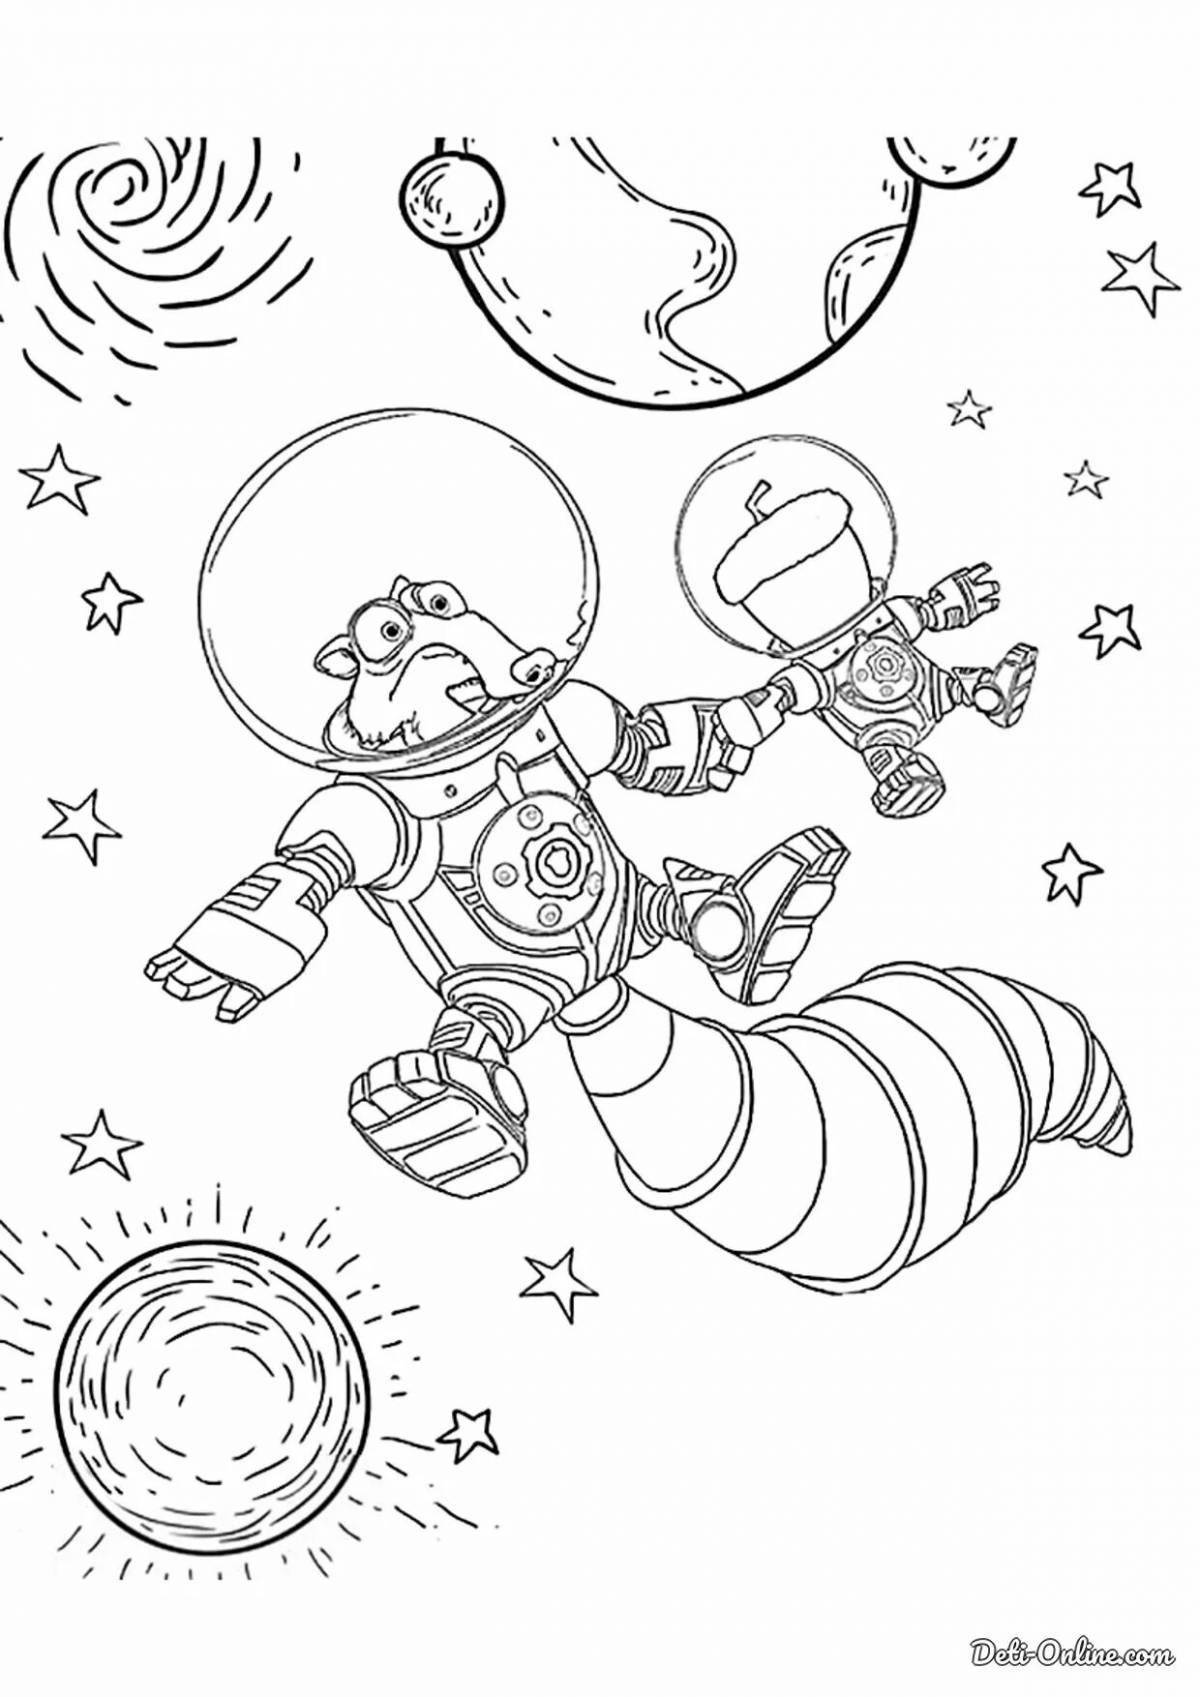 Bright space cartoon coloring book